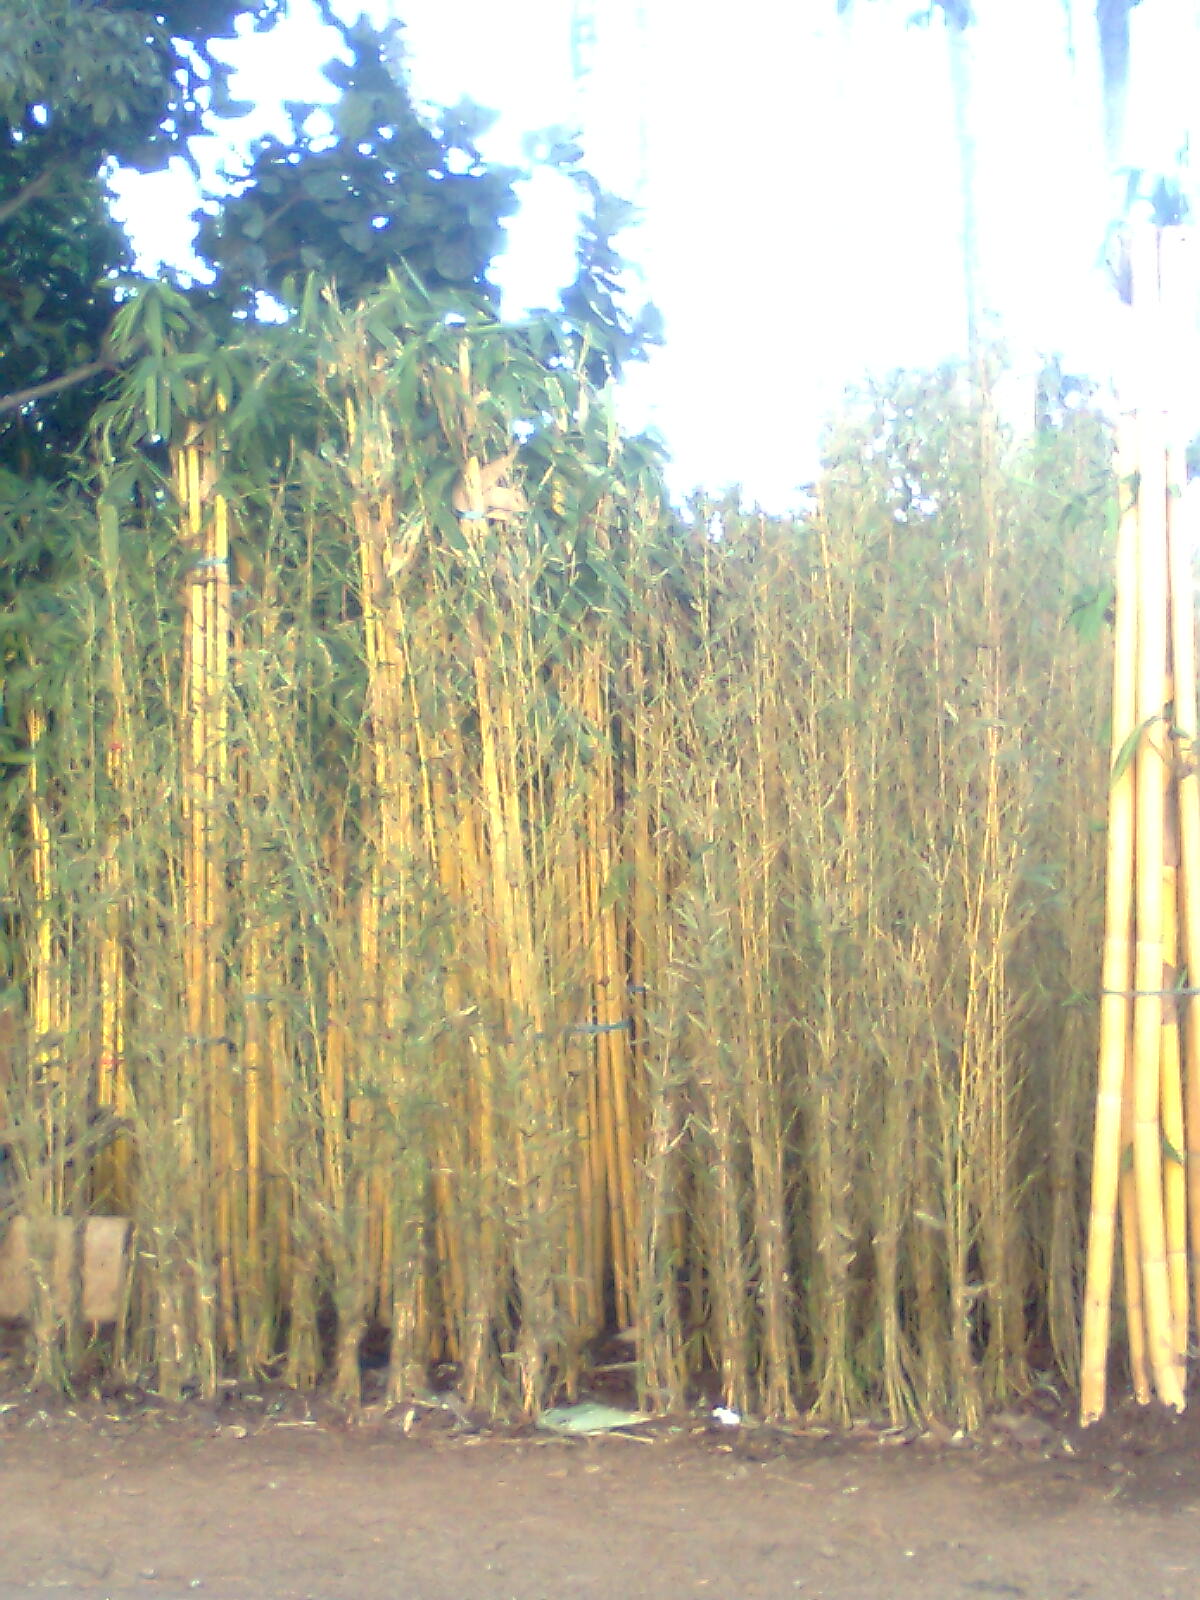  bambu  panda bambu  jepang  bambu  klisik bambu  cina bambu  